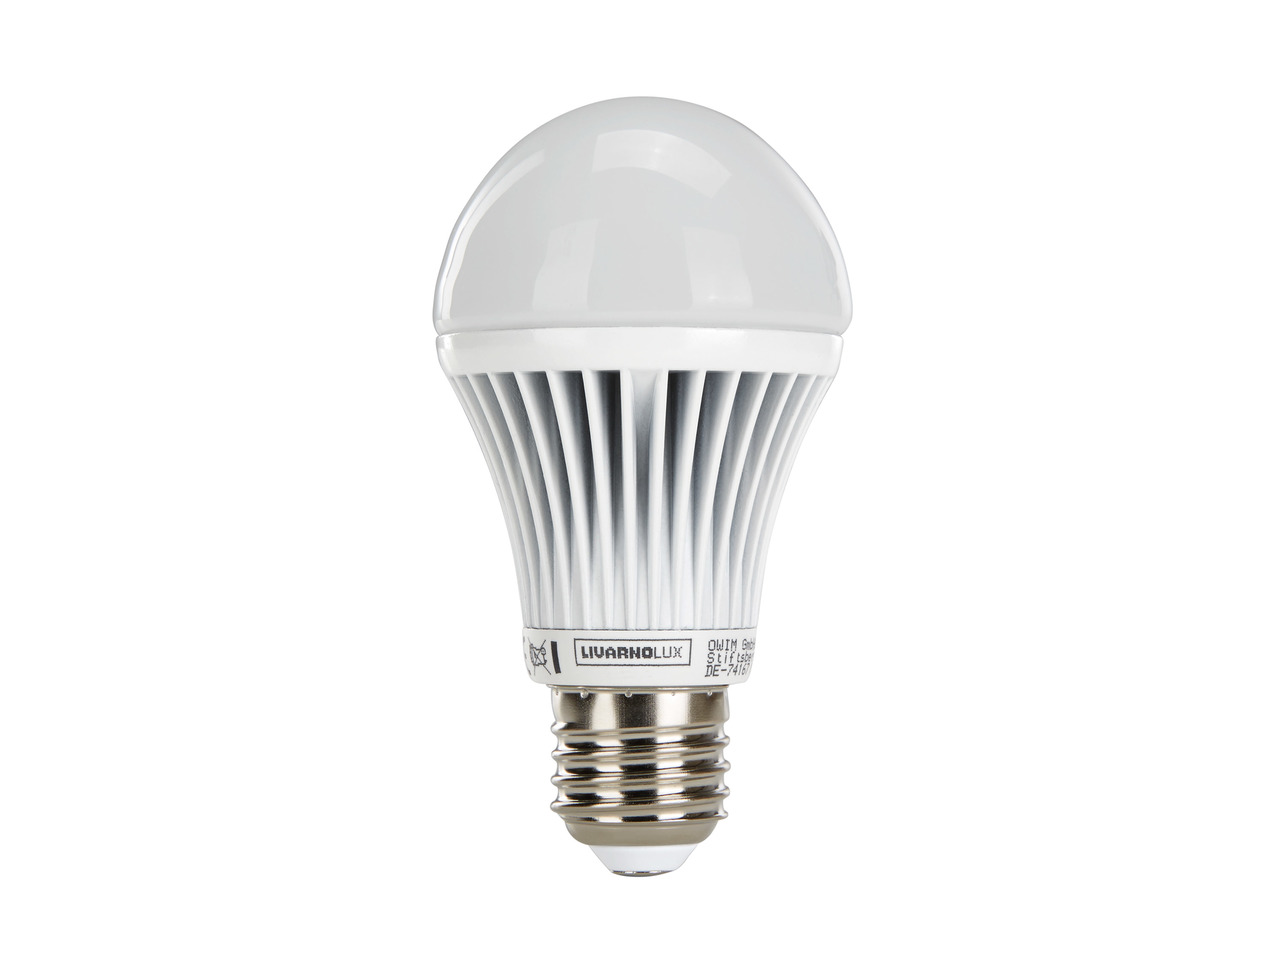 Livarno Lux LED Colour-Changing Light Bulb1